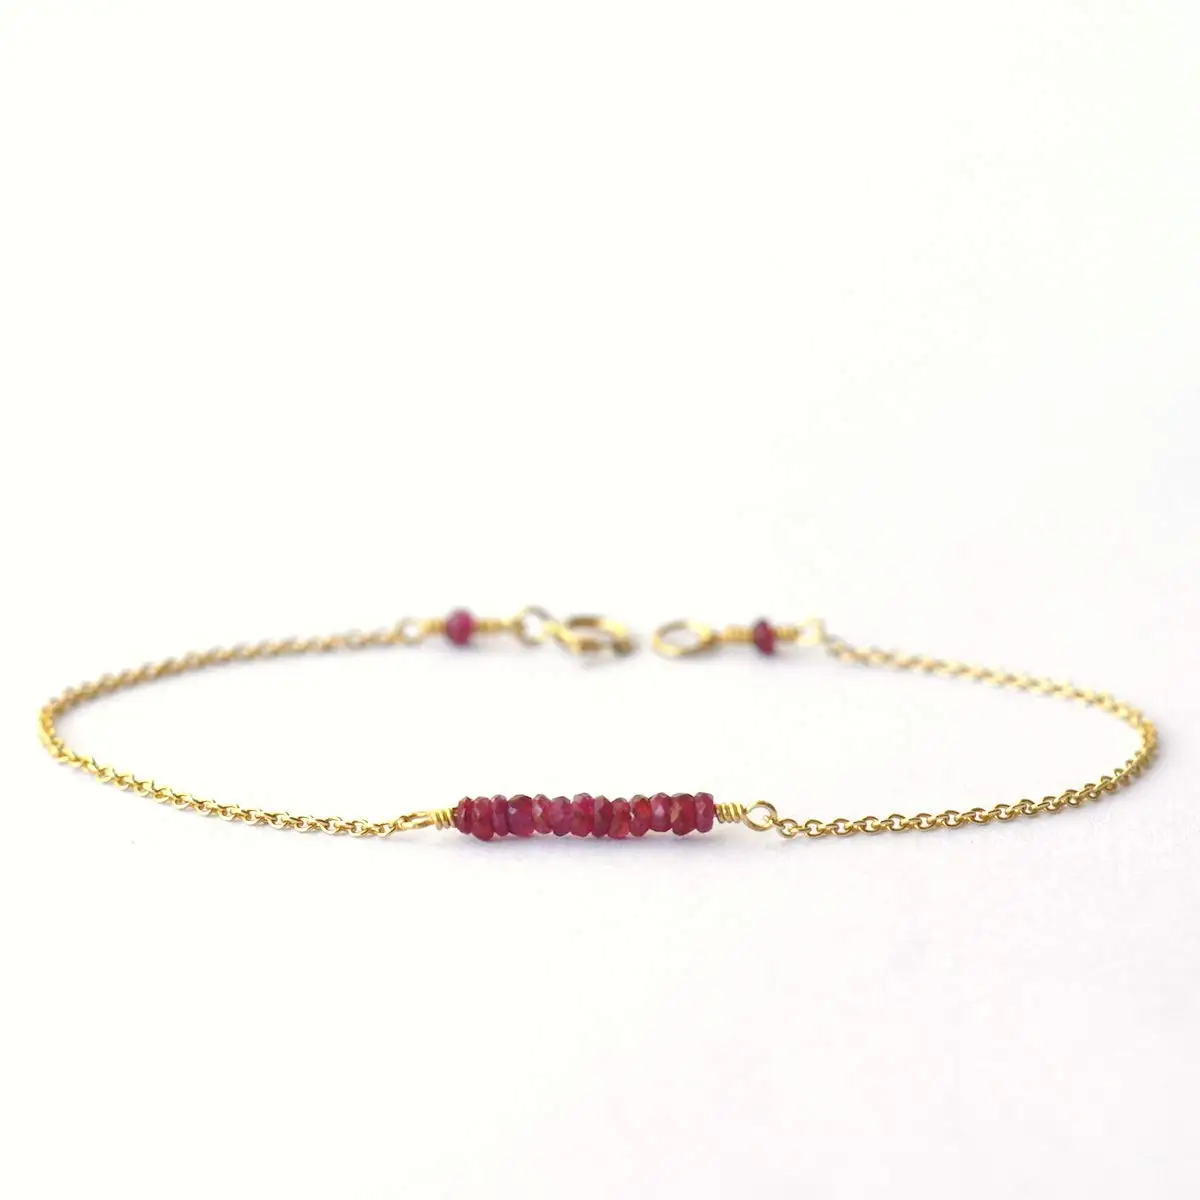 Cheap Ruby Bracelet Designs Find Ruby Bracelet Designs